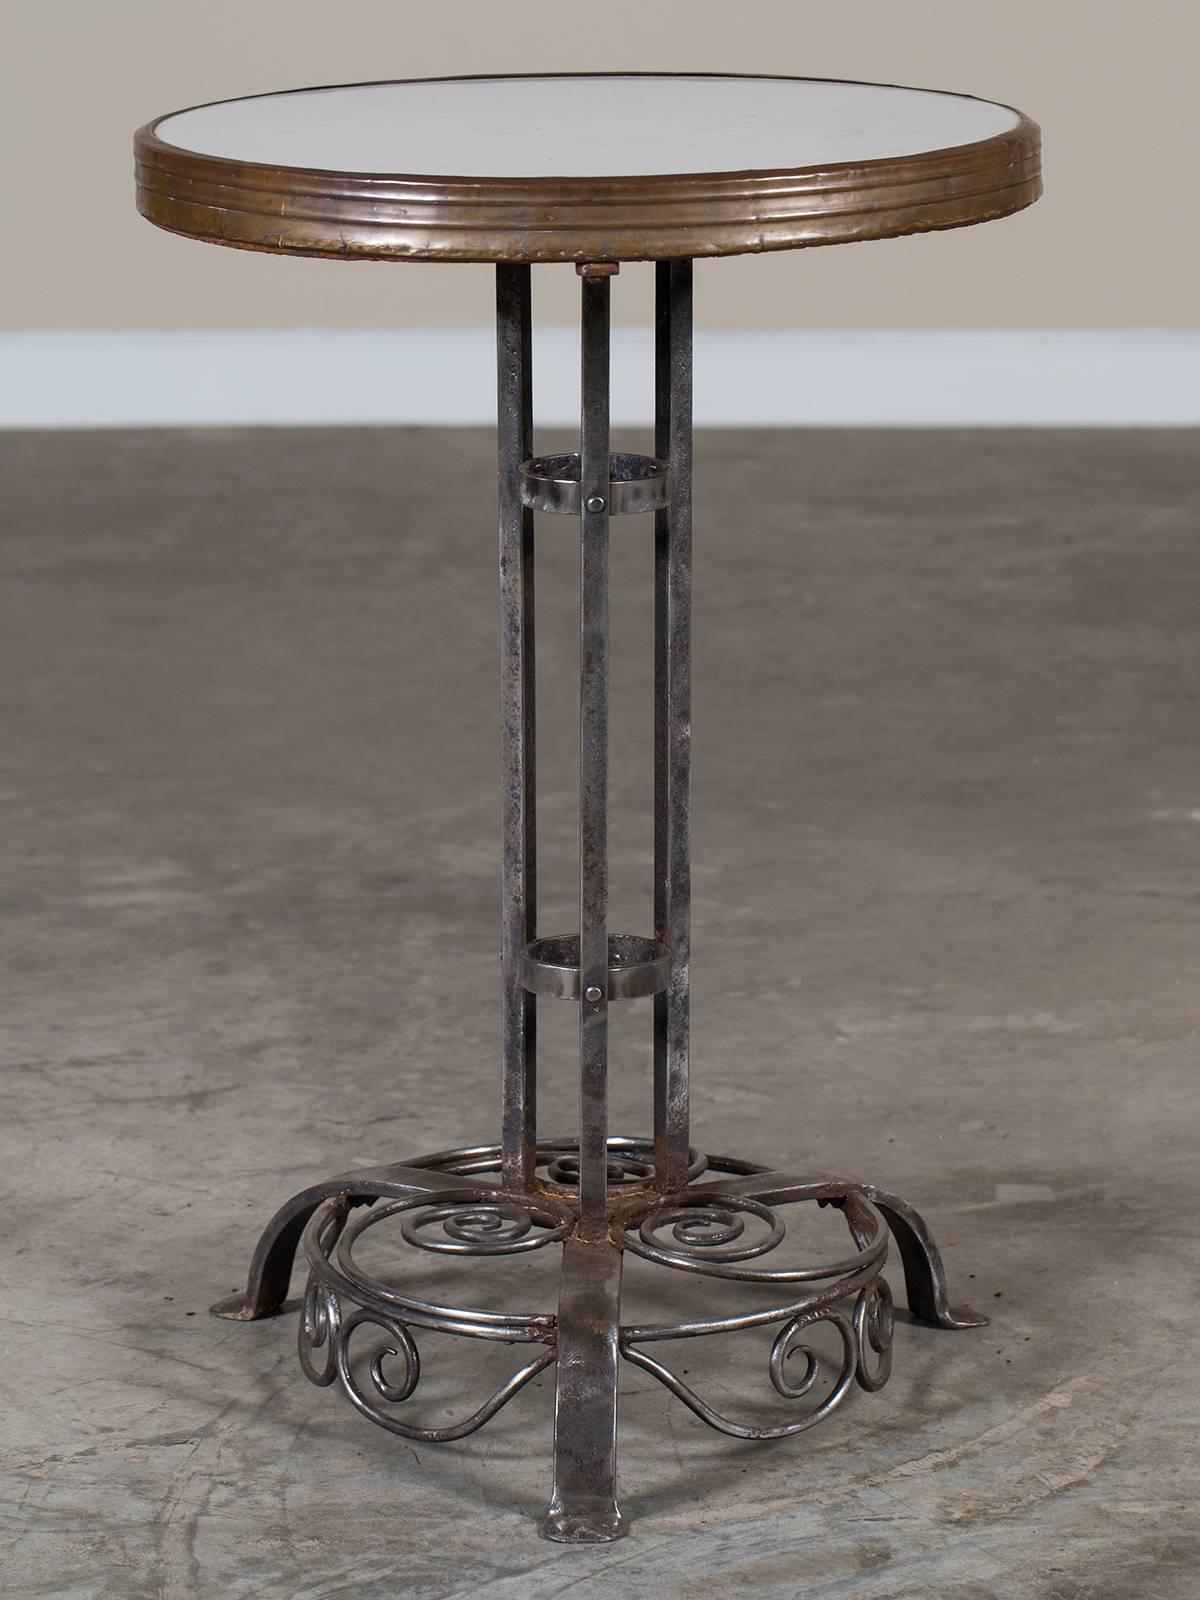 Polished Antique German Art Nouveau Iron Marble-Top Table, Munich, circa 1910